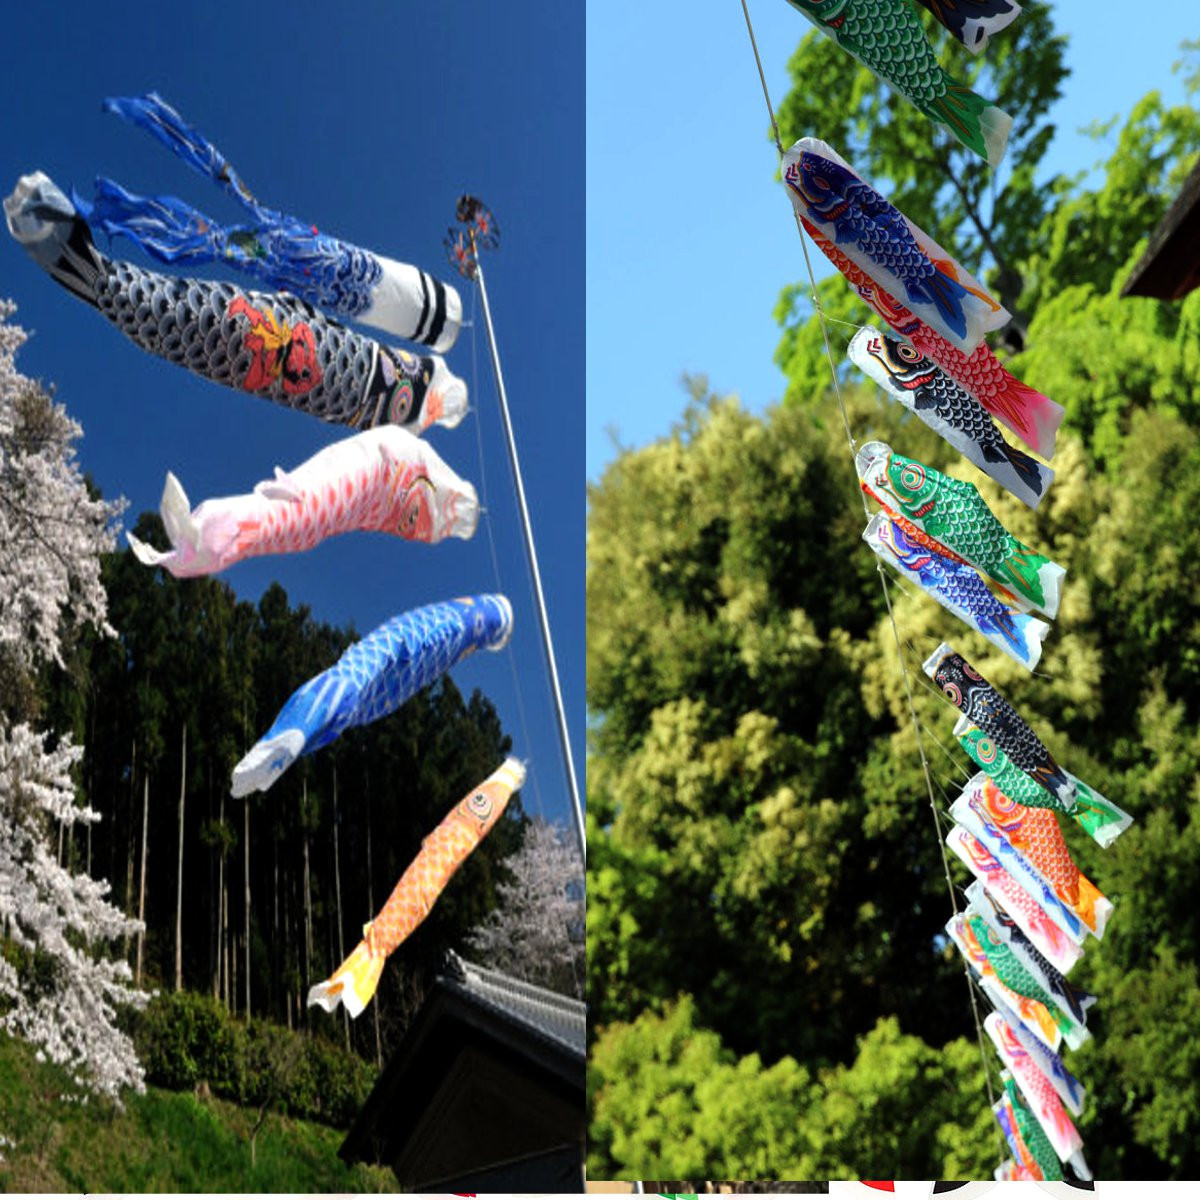 Japanese-Carp-Flag-Carp-Banners-Windsock-Sailfish-Koinobori-Sailfish-Wind-Streamer-Multicolor-Fish-1029349